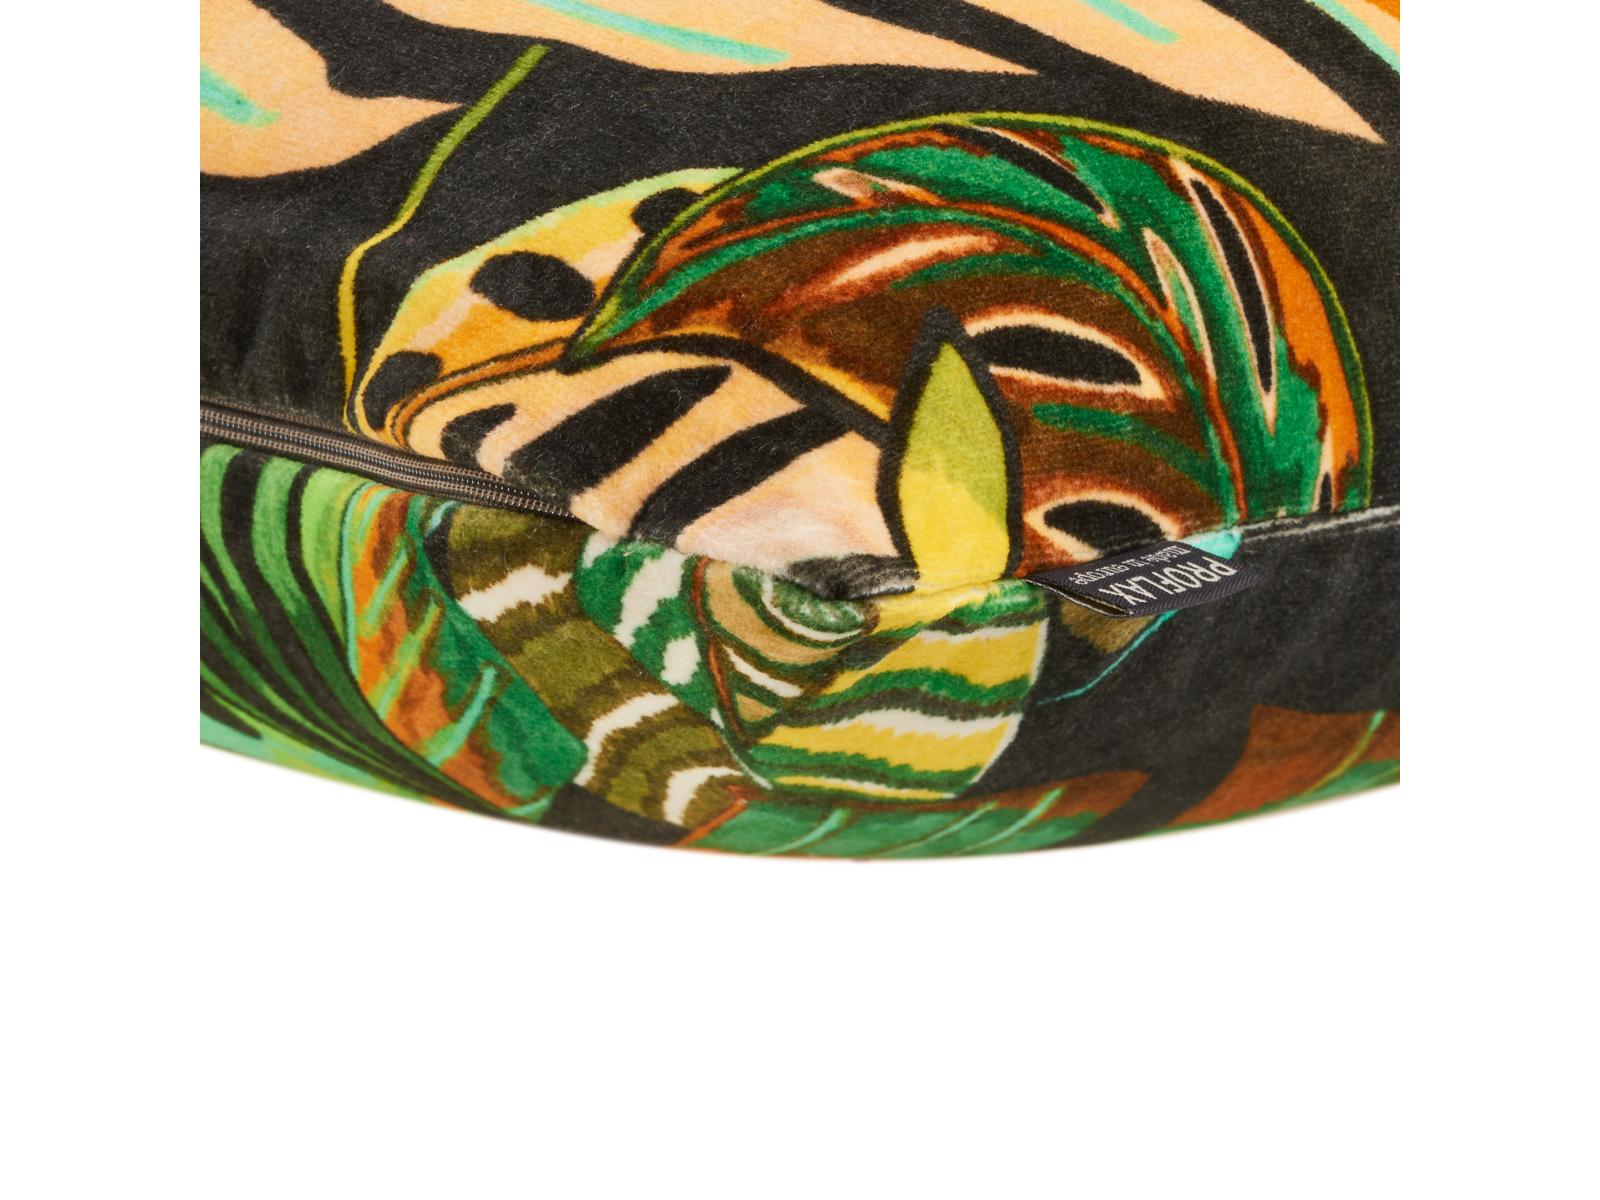 Proflax Kissenhülle Motiv Dschungelblätter grün gelb samt 40 x 60 cm